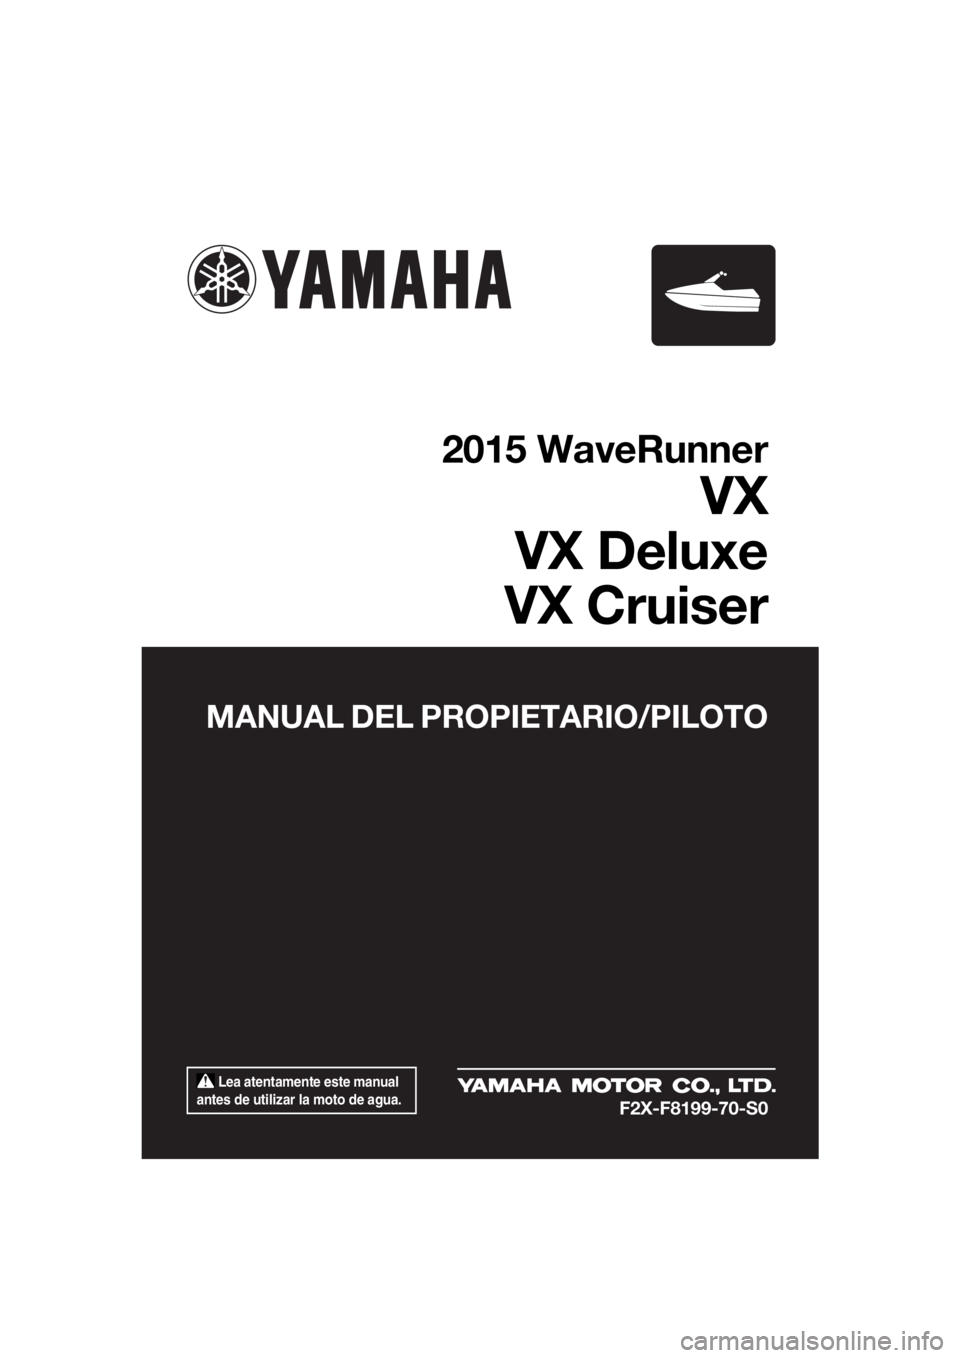 YAMAHA VX 2015  Manuale de Empleo (in Spanish)  Lea atentamente este manual 
antes de utilizar la moto de agua.
MANUAL DEL PROPIETARIO/PILOTO
2015 WaveRunner
VX
VX Deluxe
VX Cruiser
F2X-F8199-70-S0
UF2X70S0.book  Page 1  Wednesday, September 17, 2